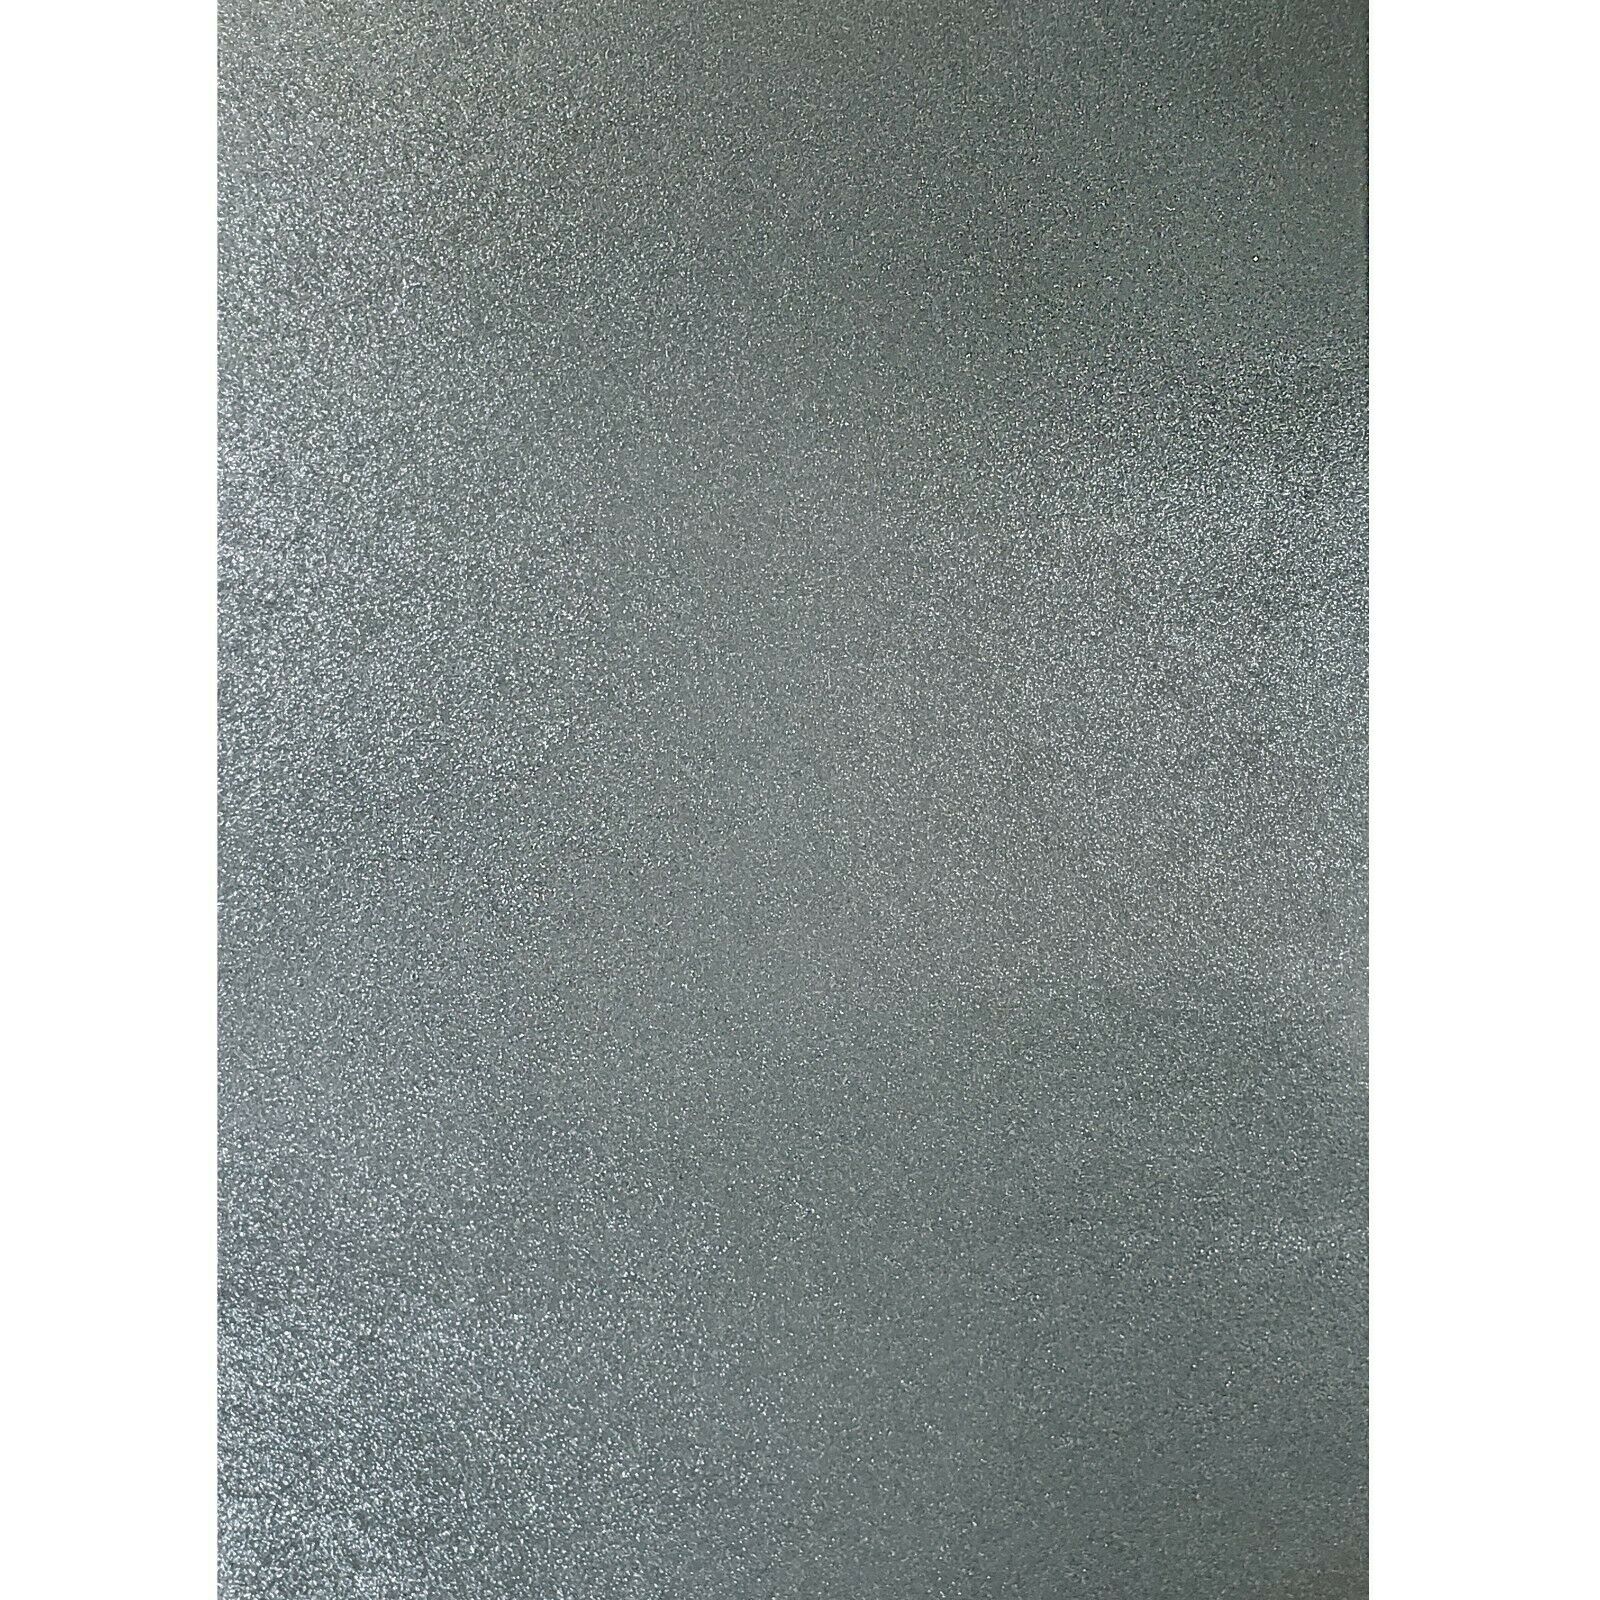 M6180 Charcoal gray Natural Terra Mica Stone Plain Glitter